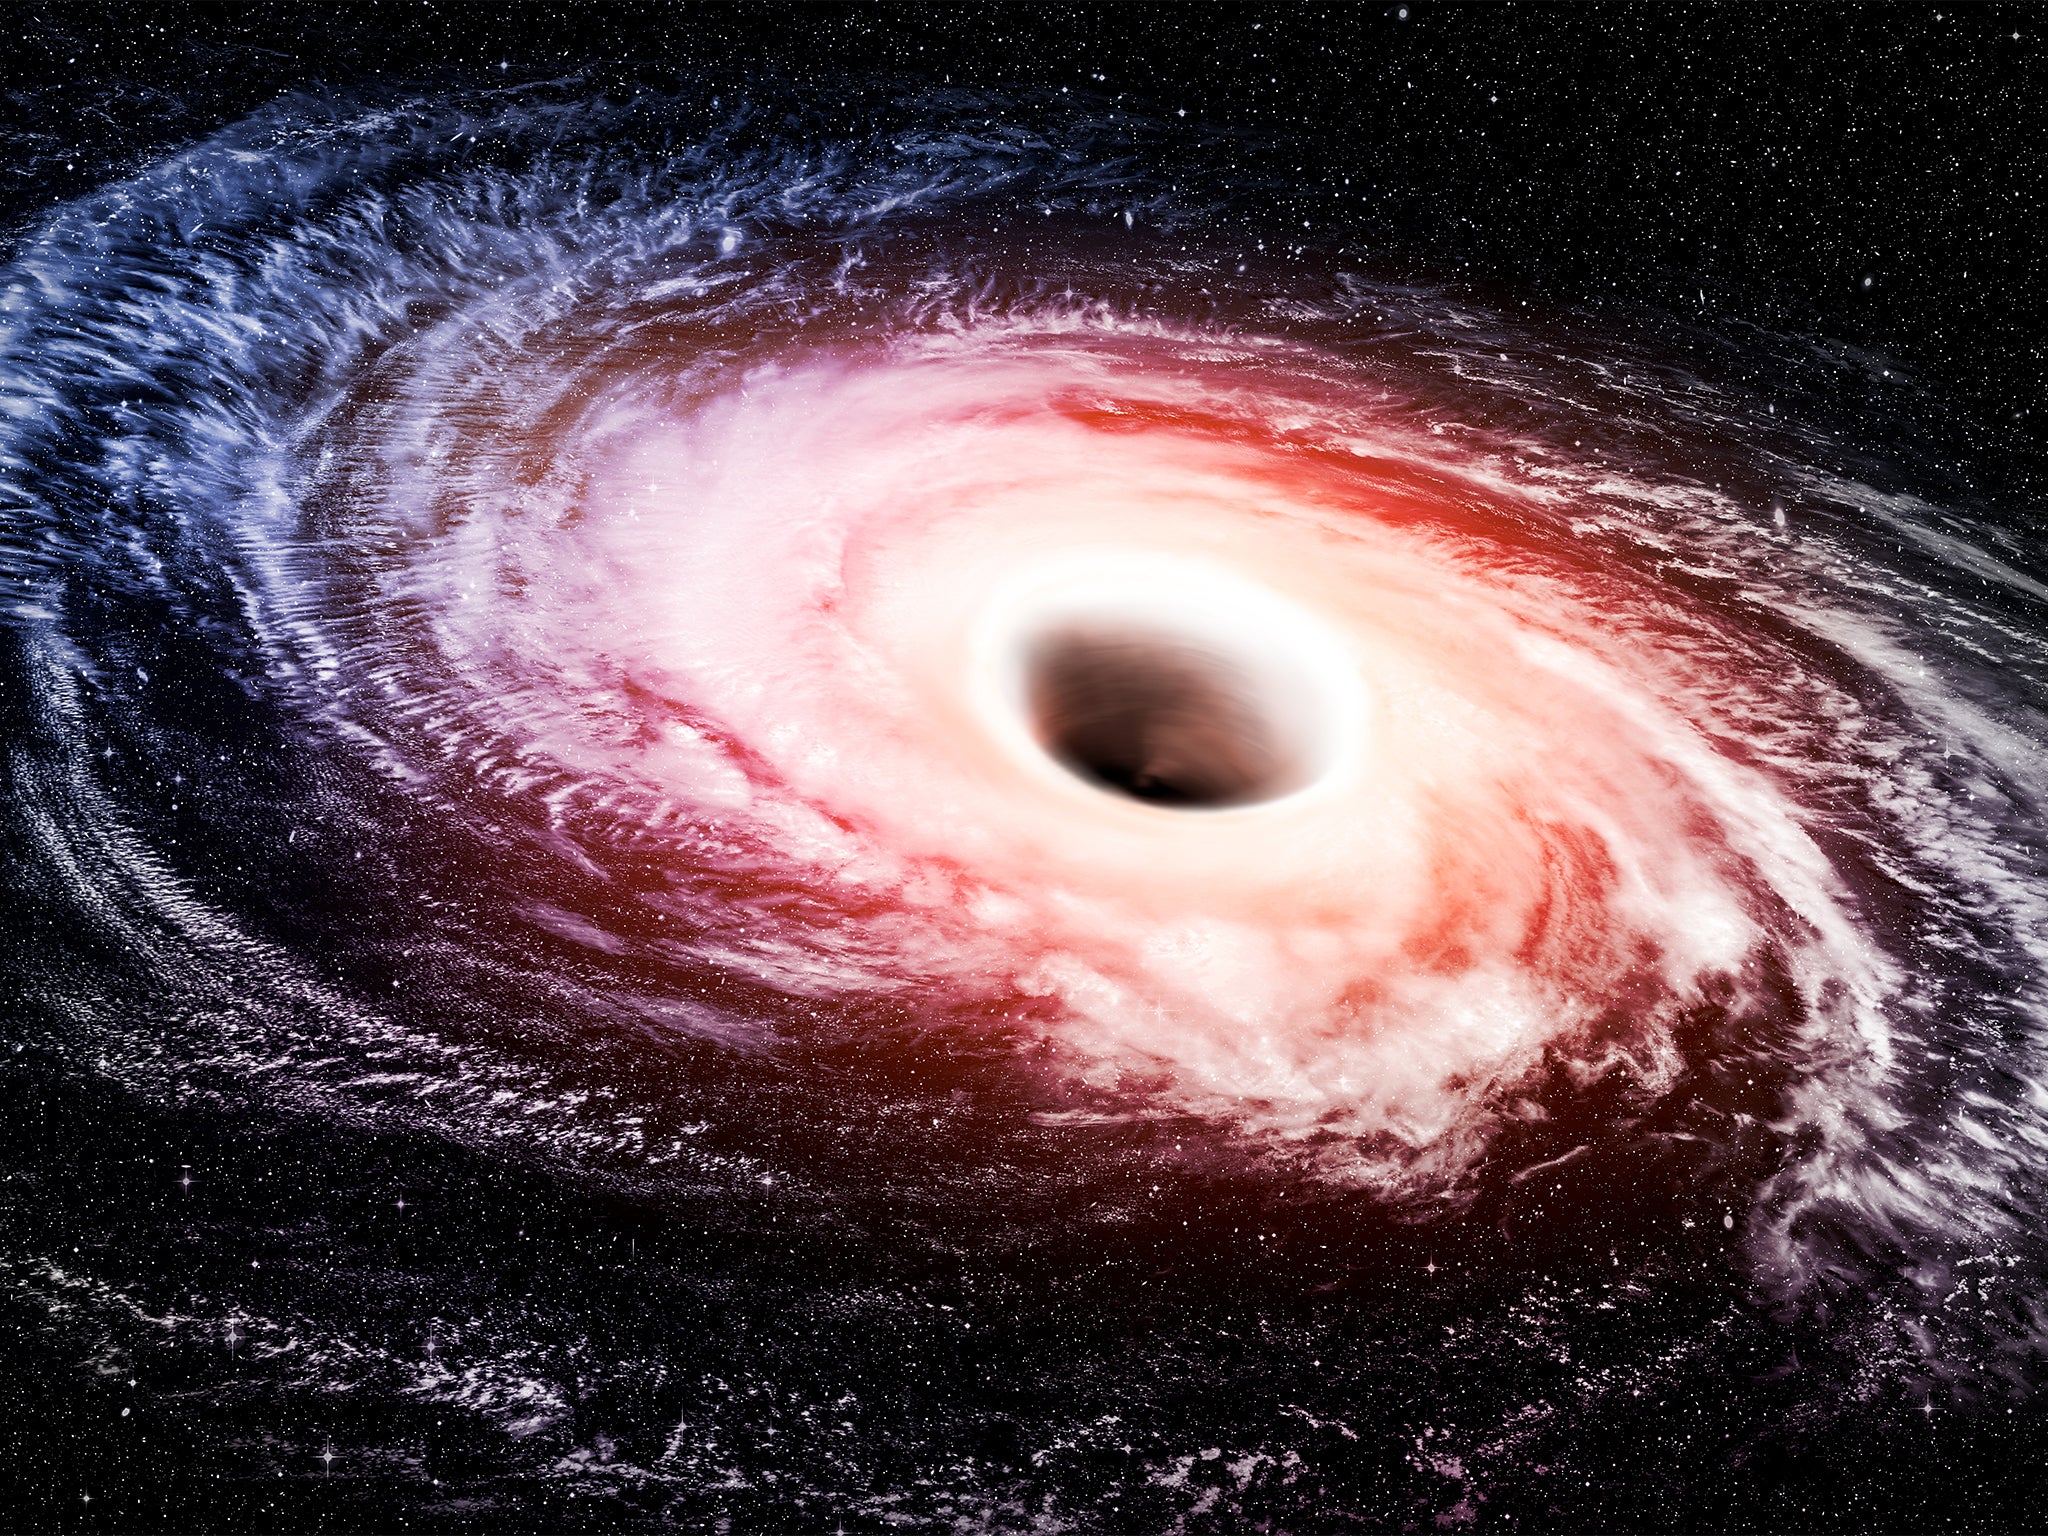 Supermassive Black Hole Science Channel